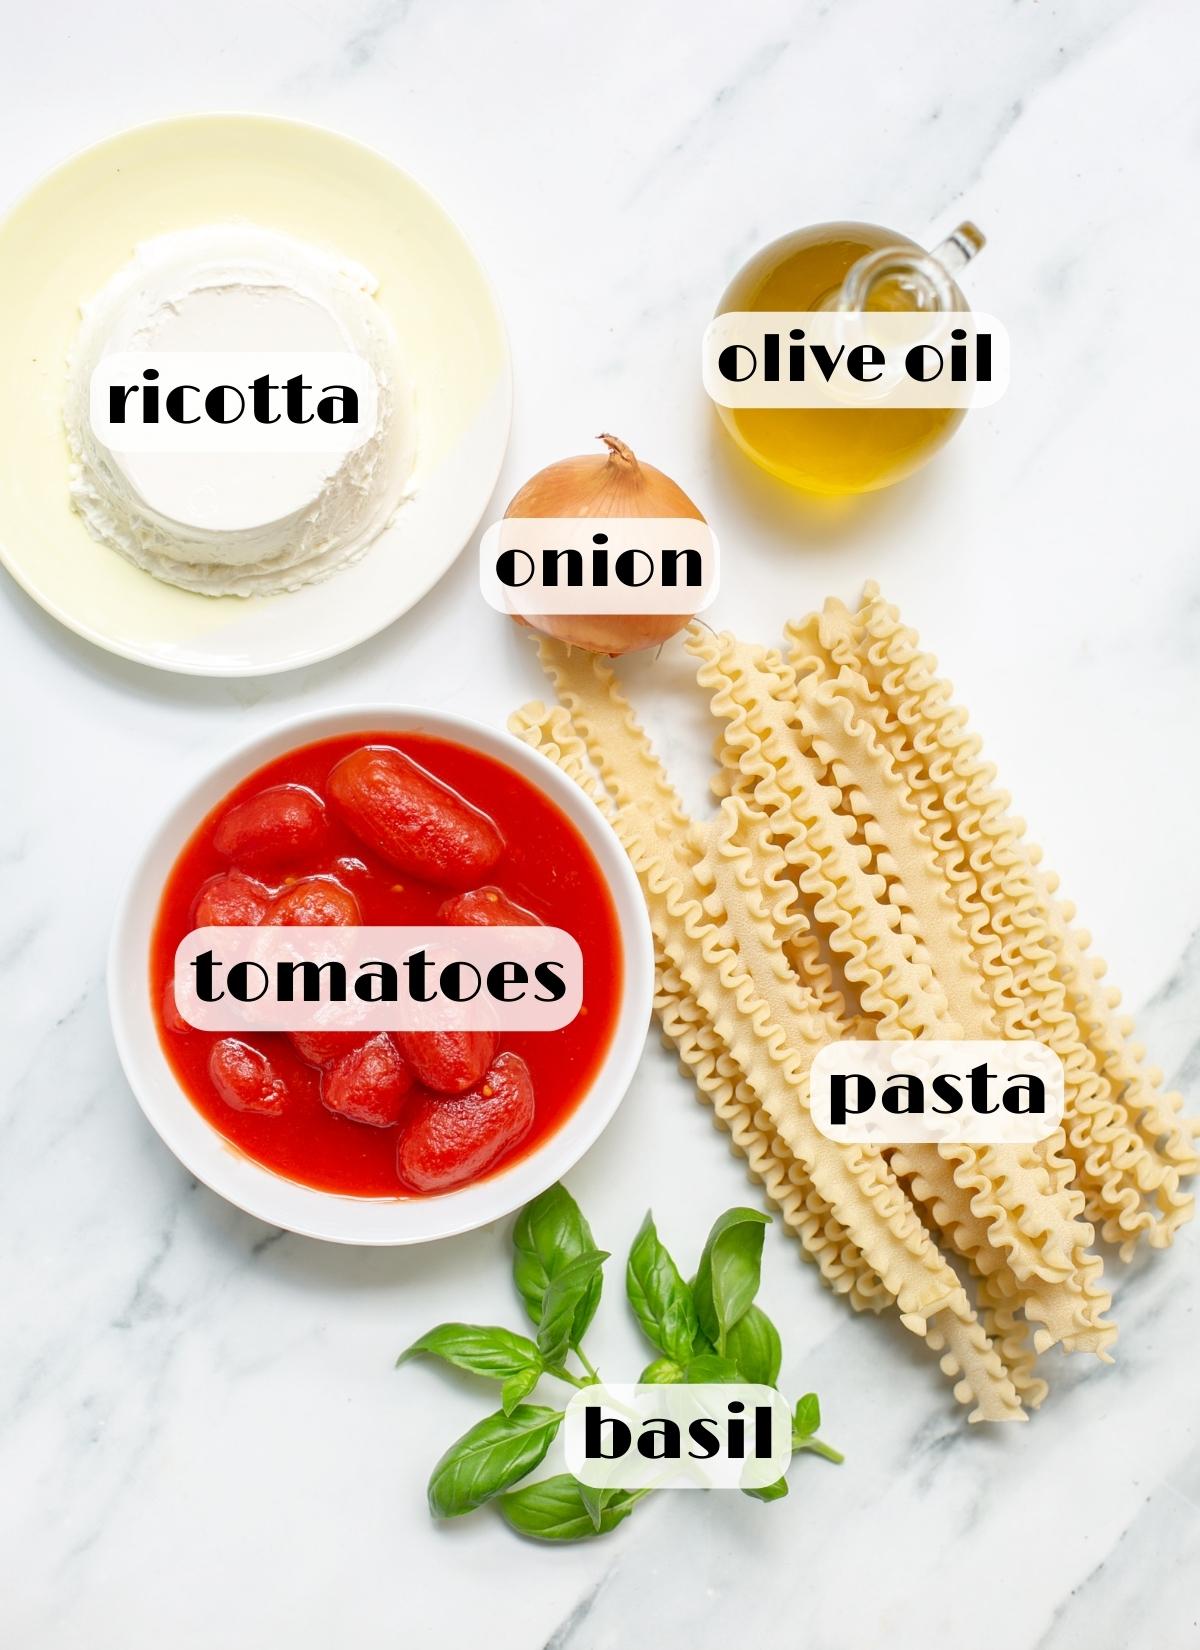 Mafaldine pasta with napoletana sauce ingredients: canned tomatoes, mafalda pasta, basil, onion, ricotta cheese and olive oil.